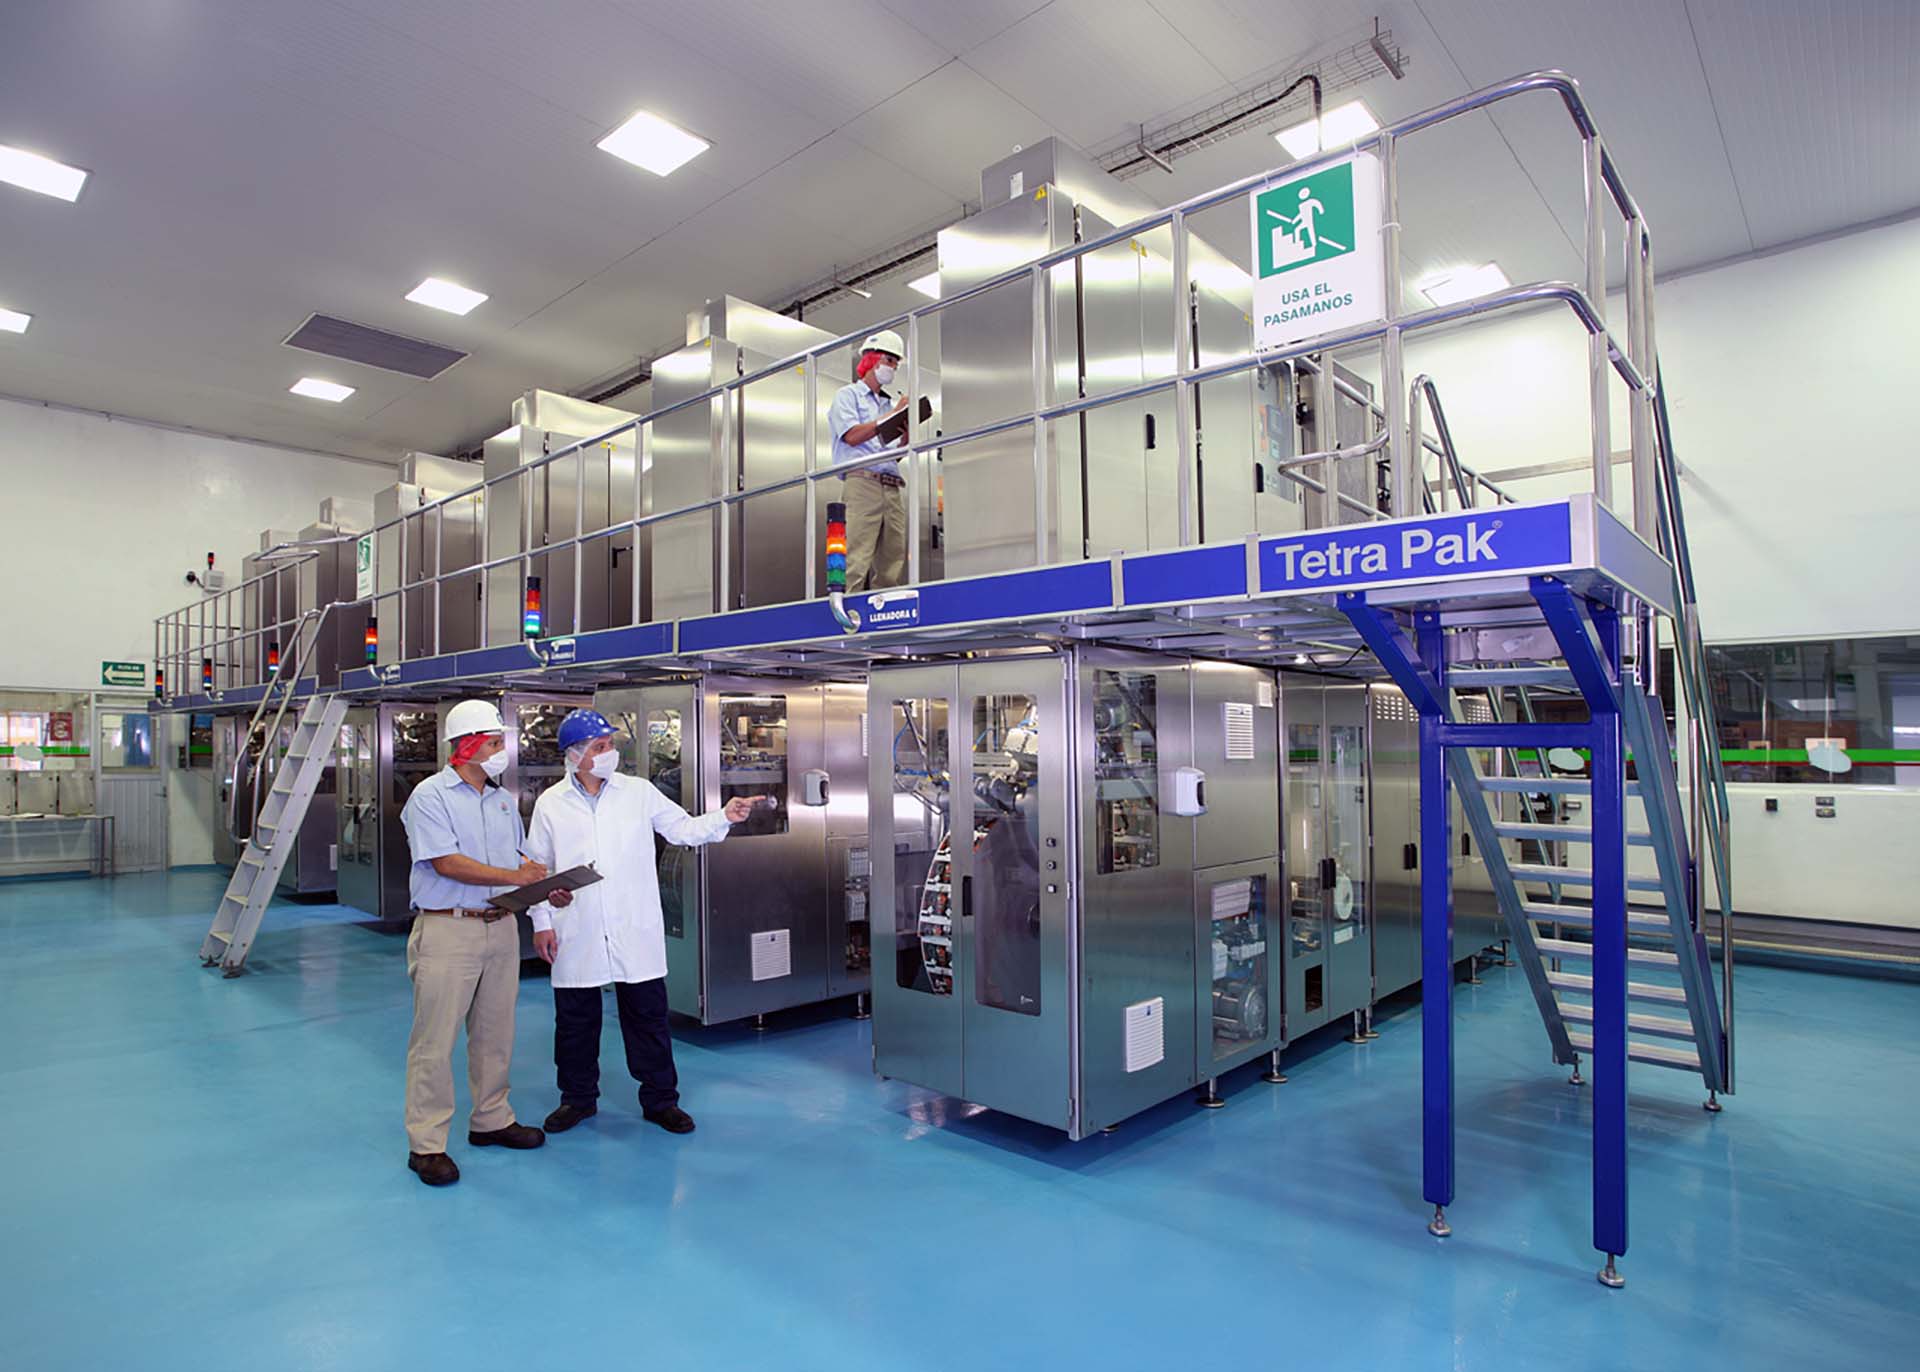 Workers monitoring production at a Tetra Pak packaging facility.